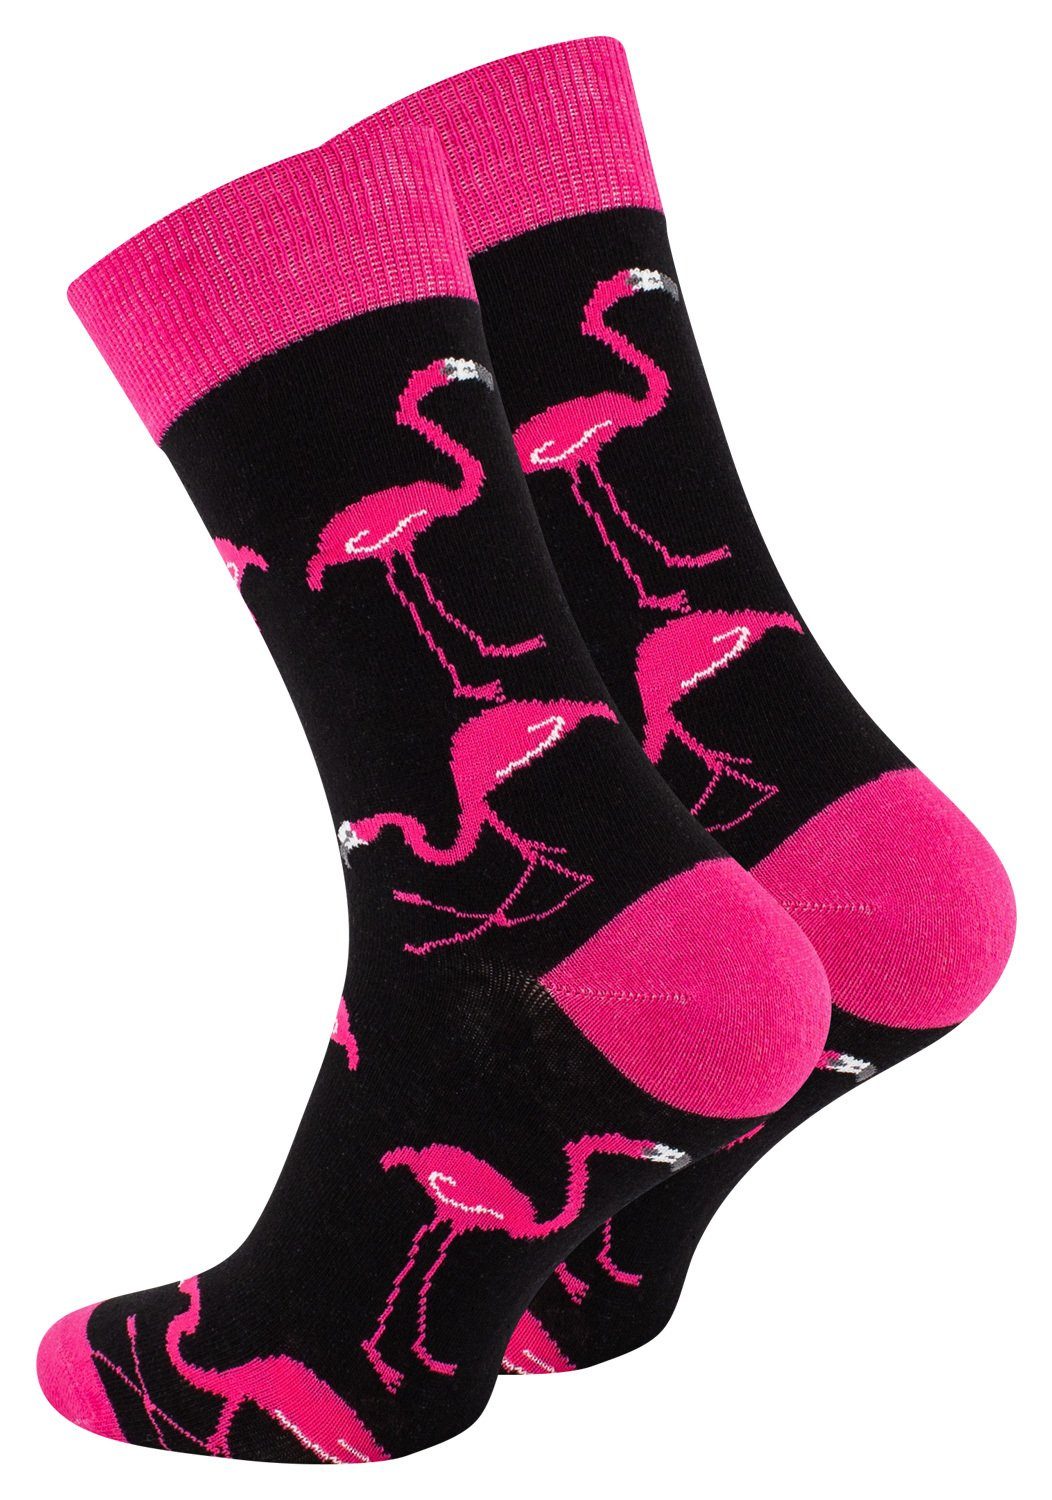 PinkFlamingo Socken Vincent lustigen bunten Creation® mit Motiven